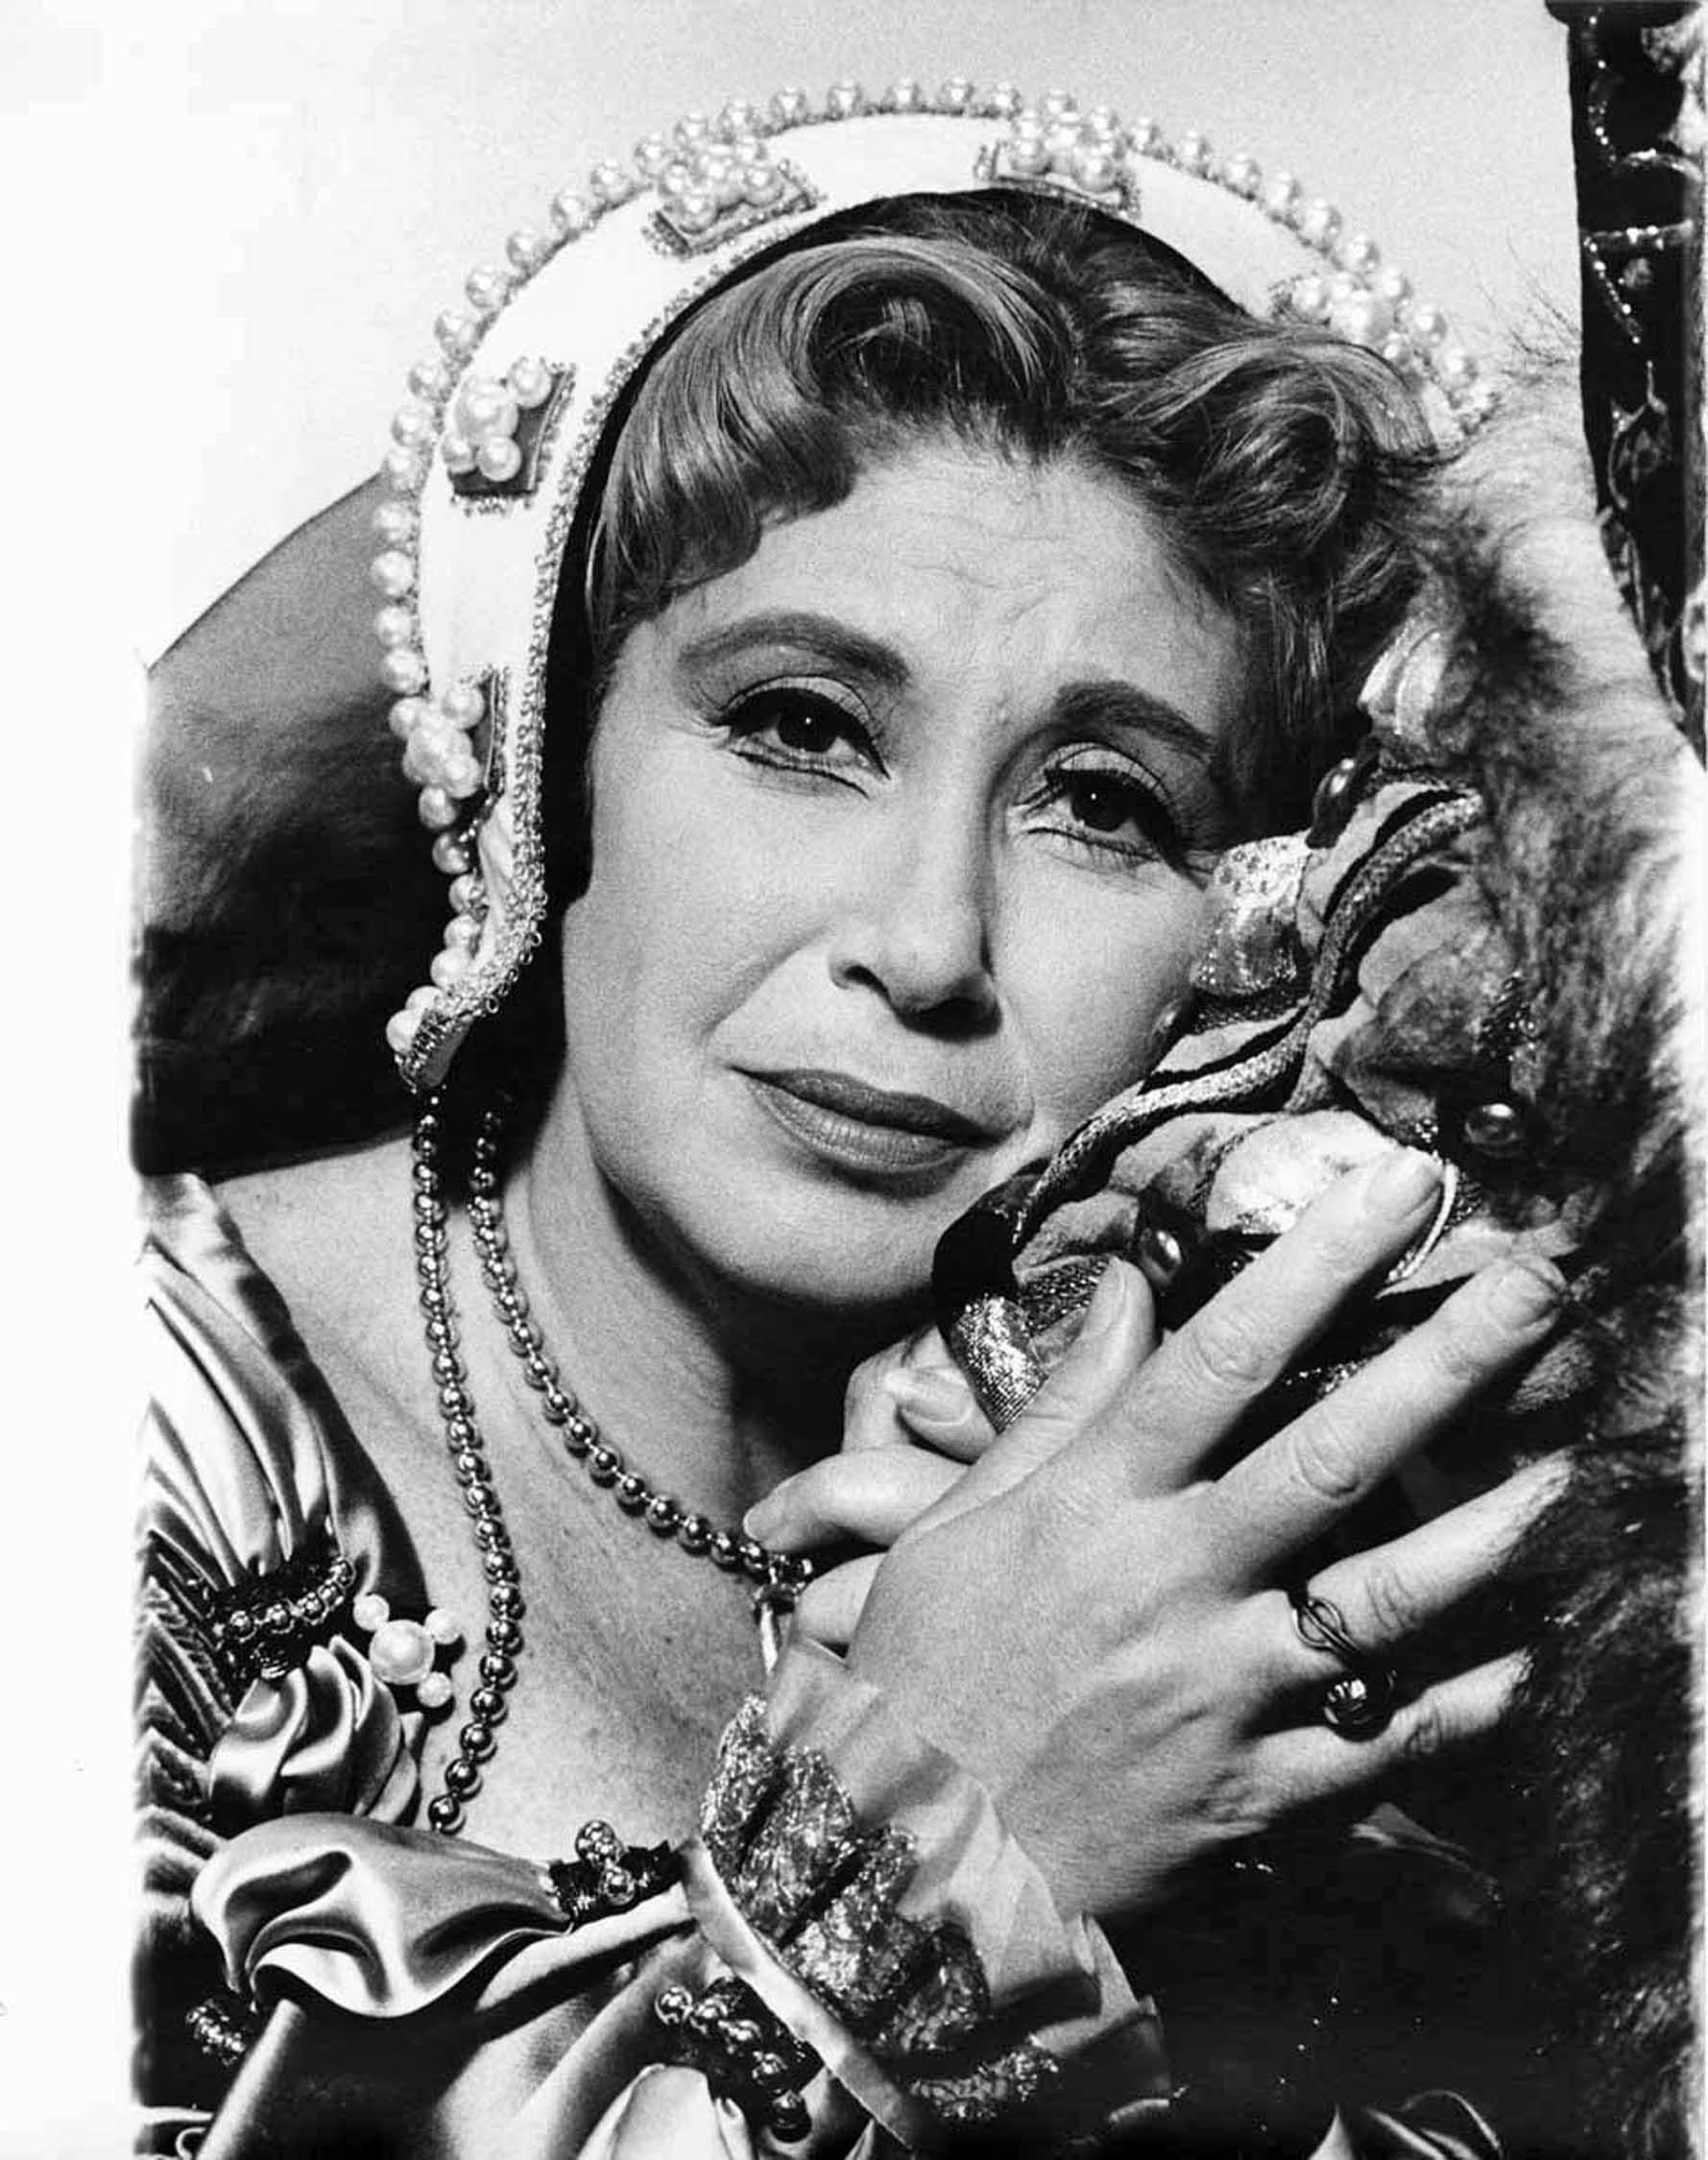 Jack Mitchell Black and White Photograph - New York City Opera Star Beverly Sills as 'Anna Bolena'